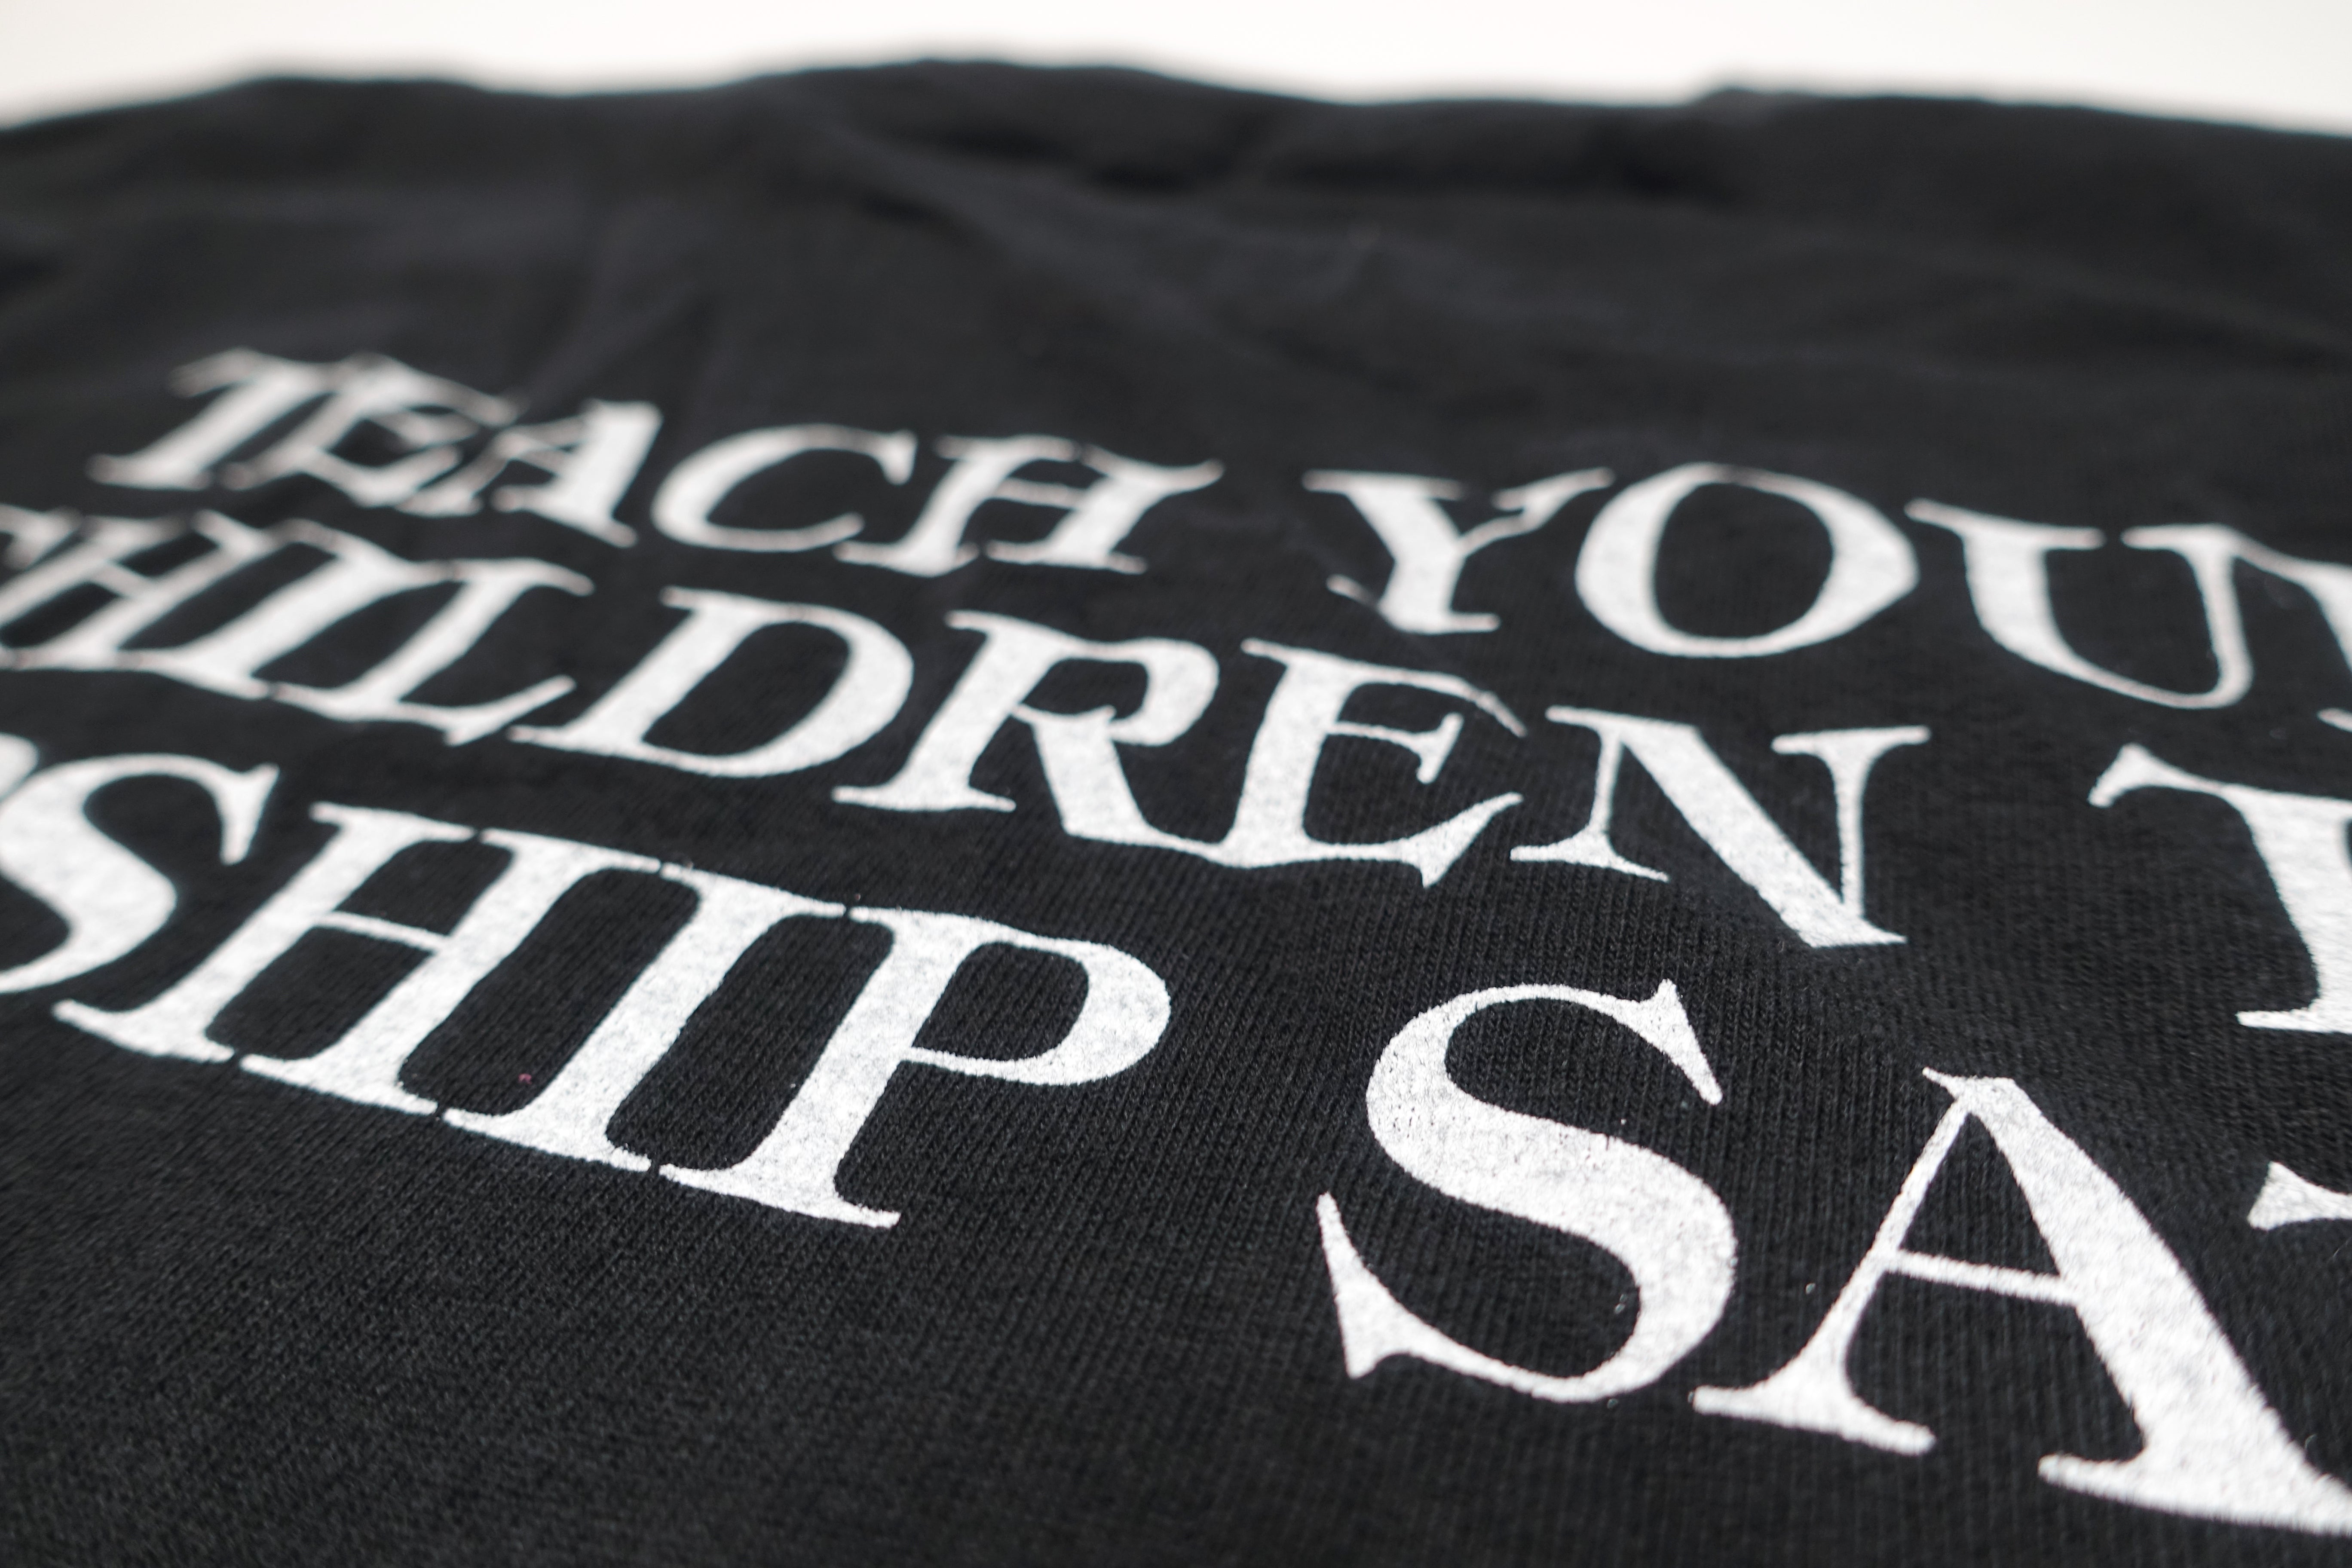 Dwarves ‎– Teach Your Children To Warship Satan 90's Tour Shirt Size XL